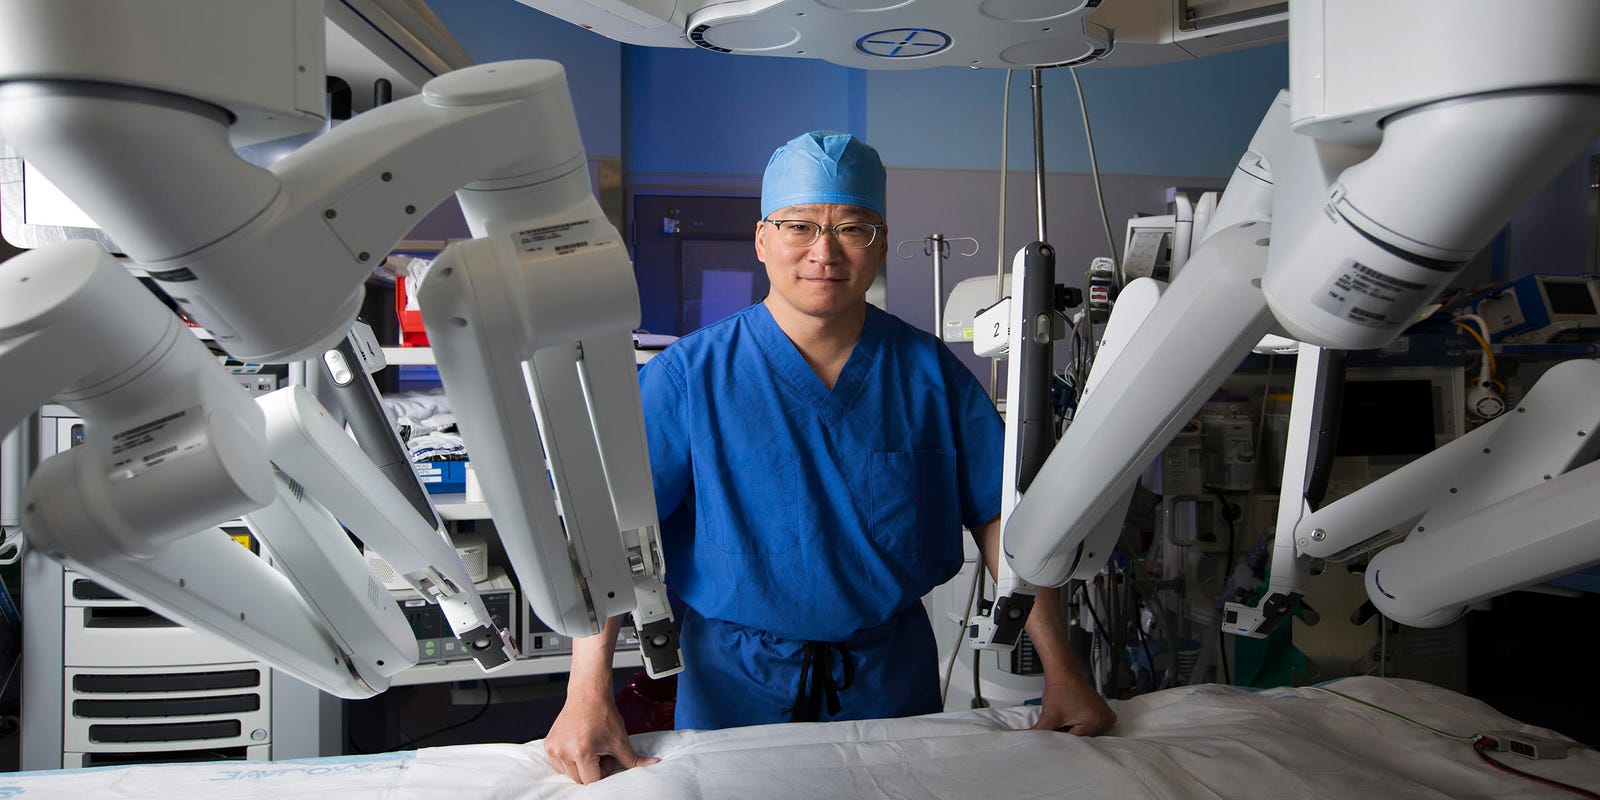 Da Vinci robotic technology revolutionizes surgeries